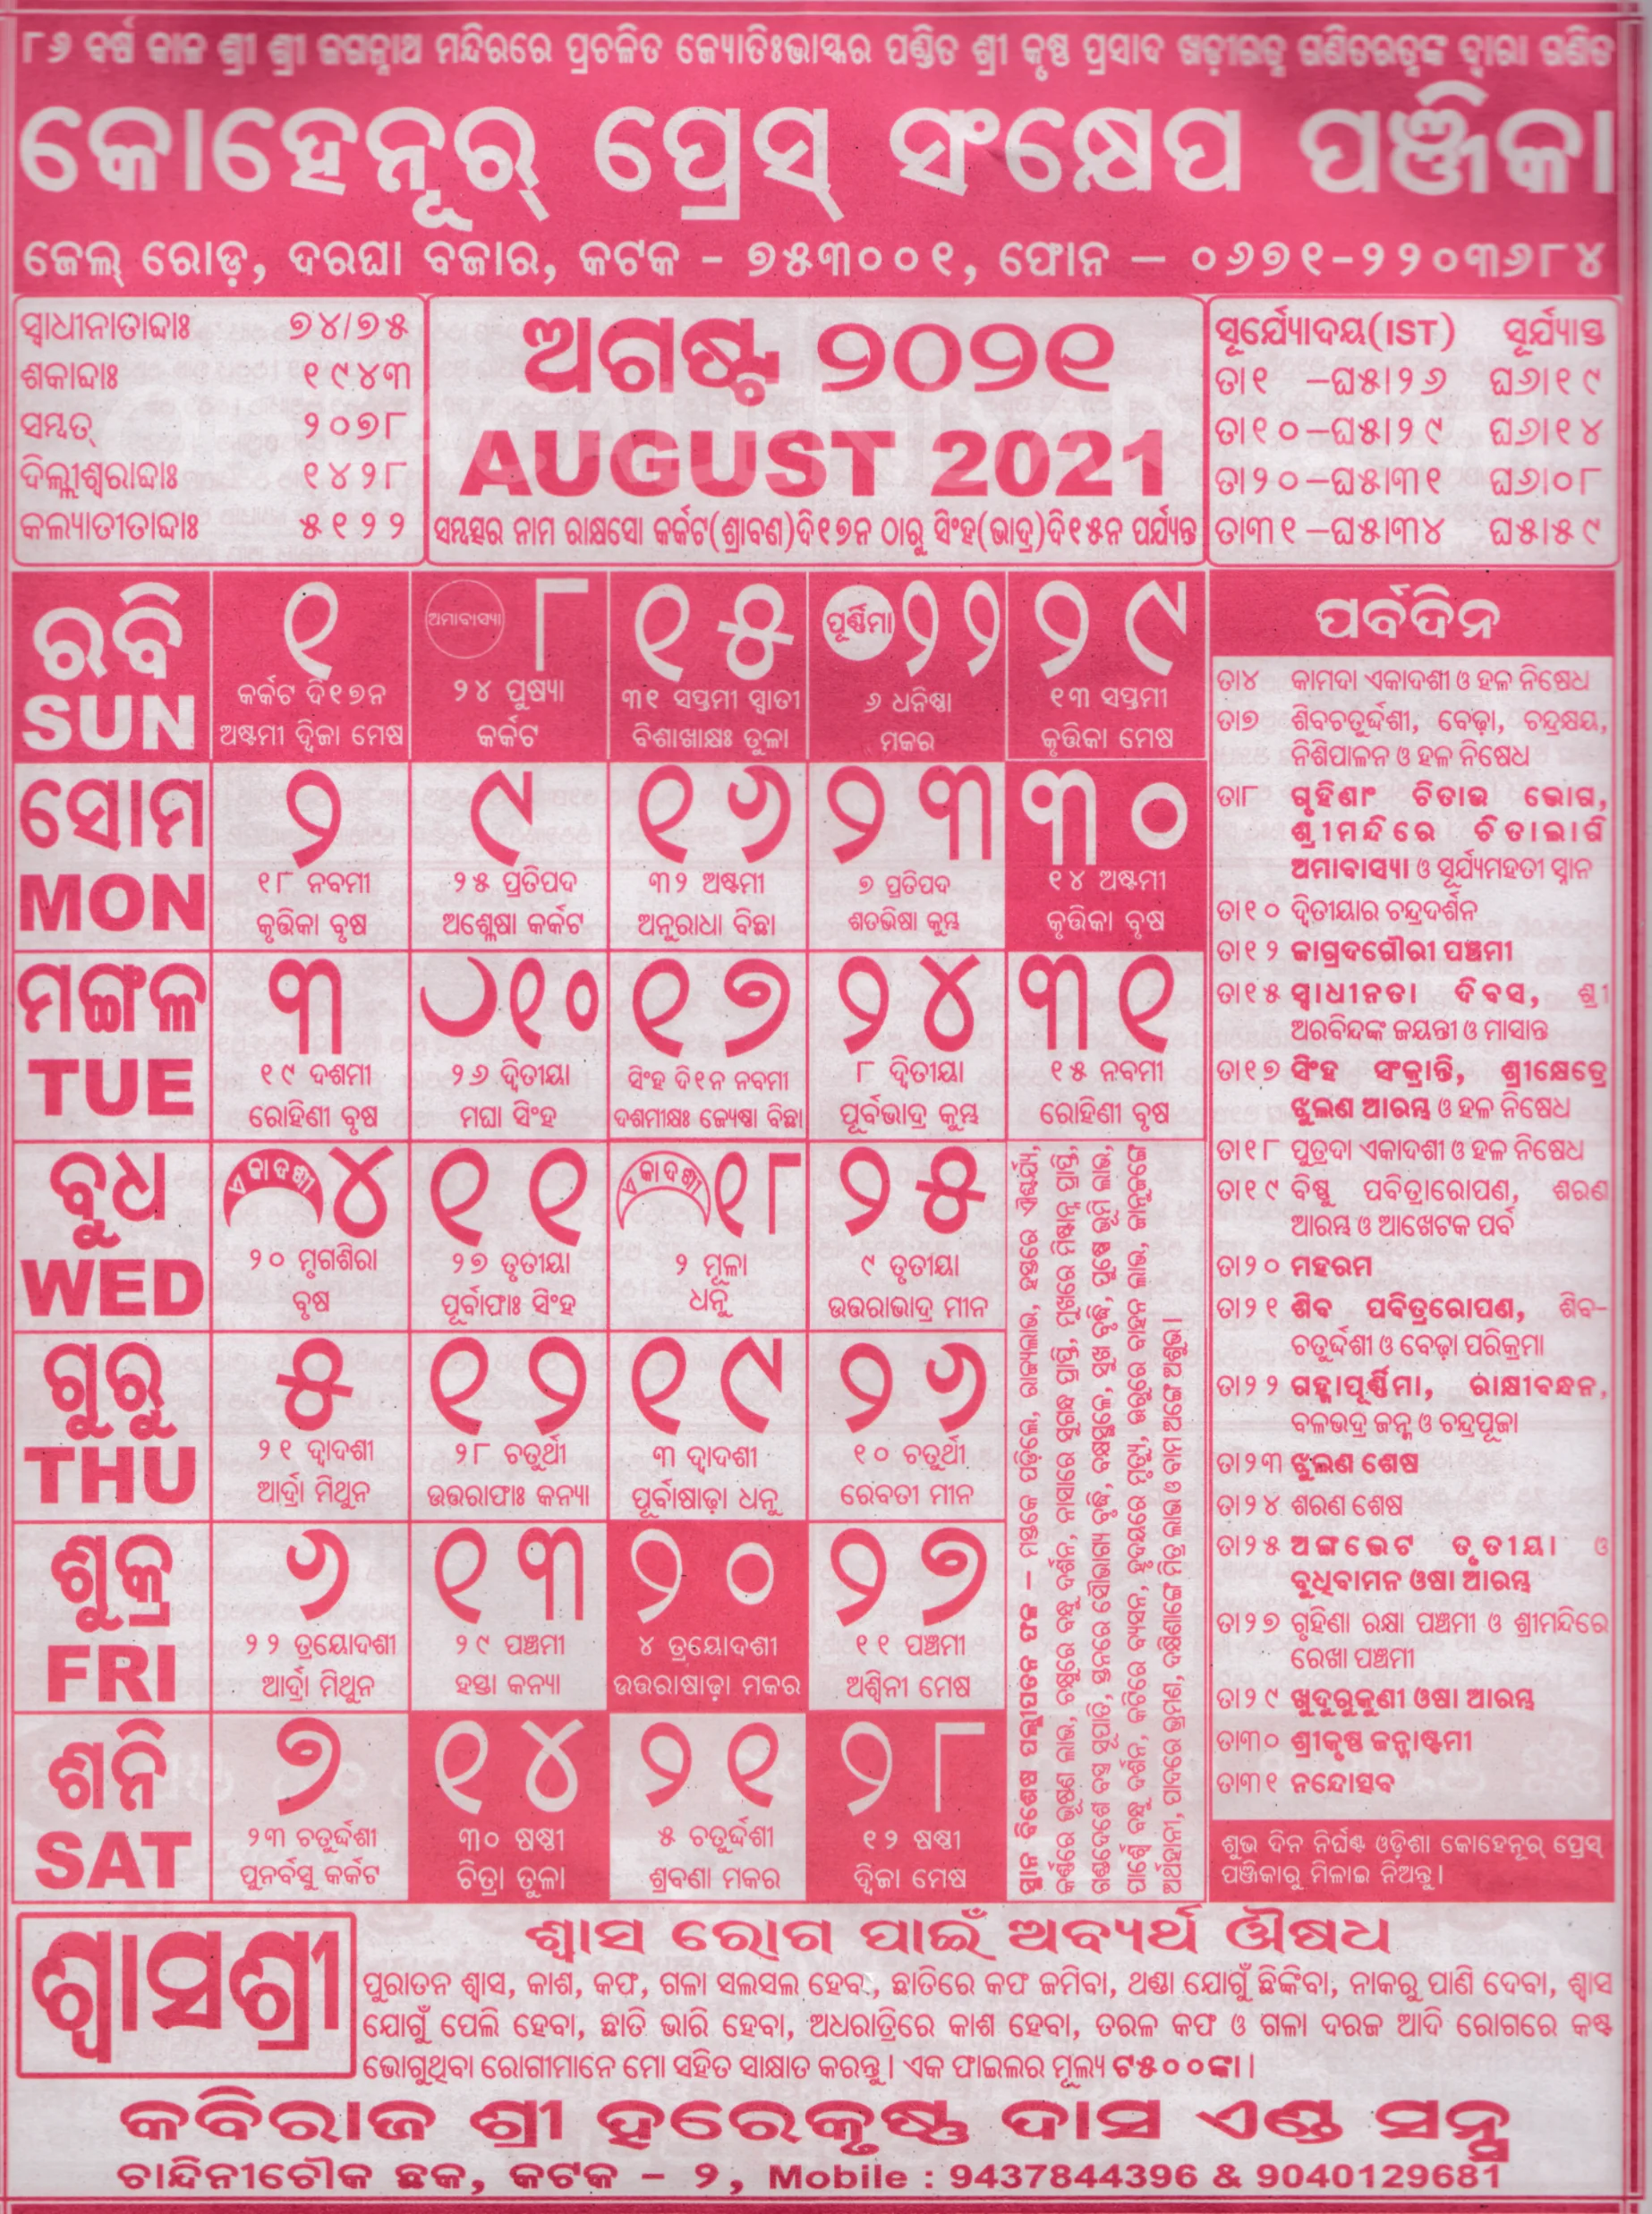 kohinoor calendar august 2022